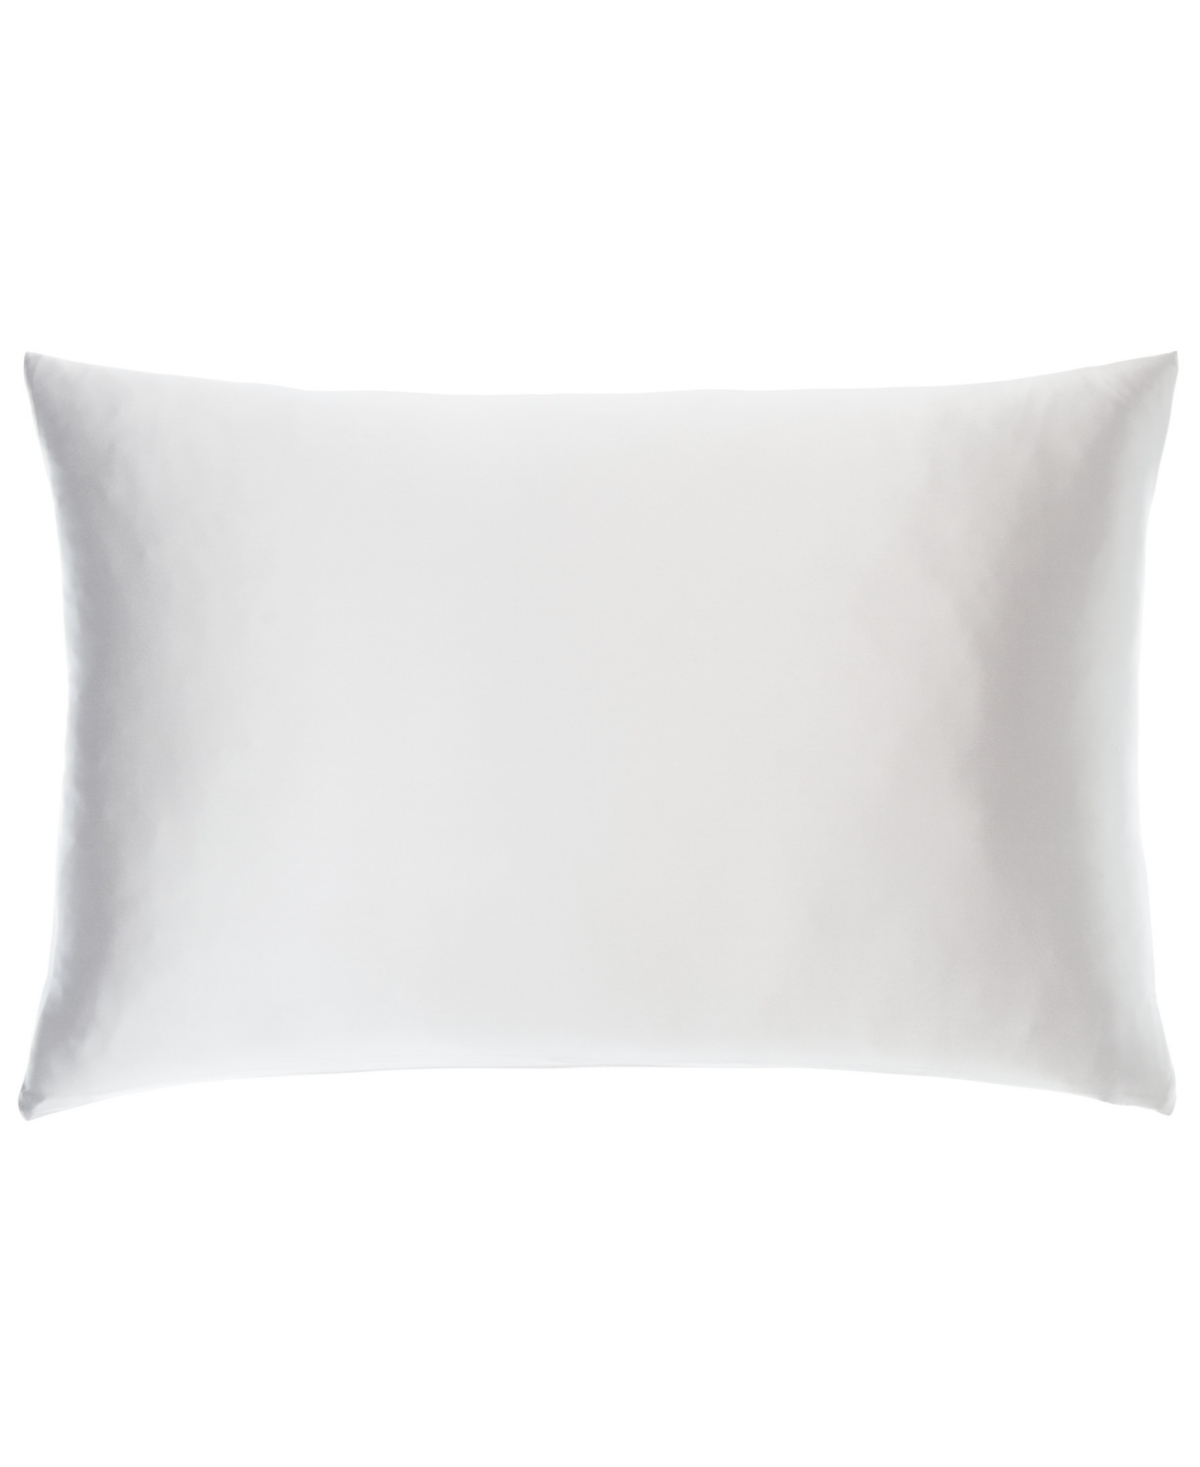 Donna Karan Home Platinum Silky Pillowcase, Standard